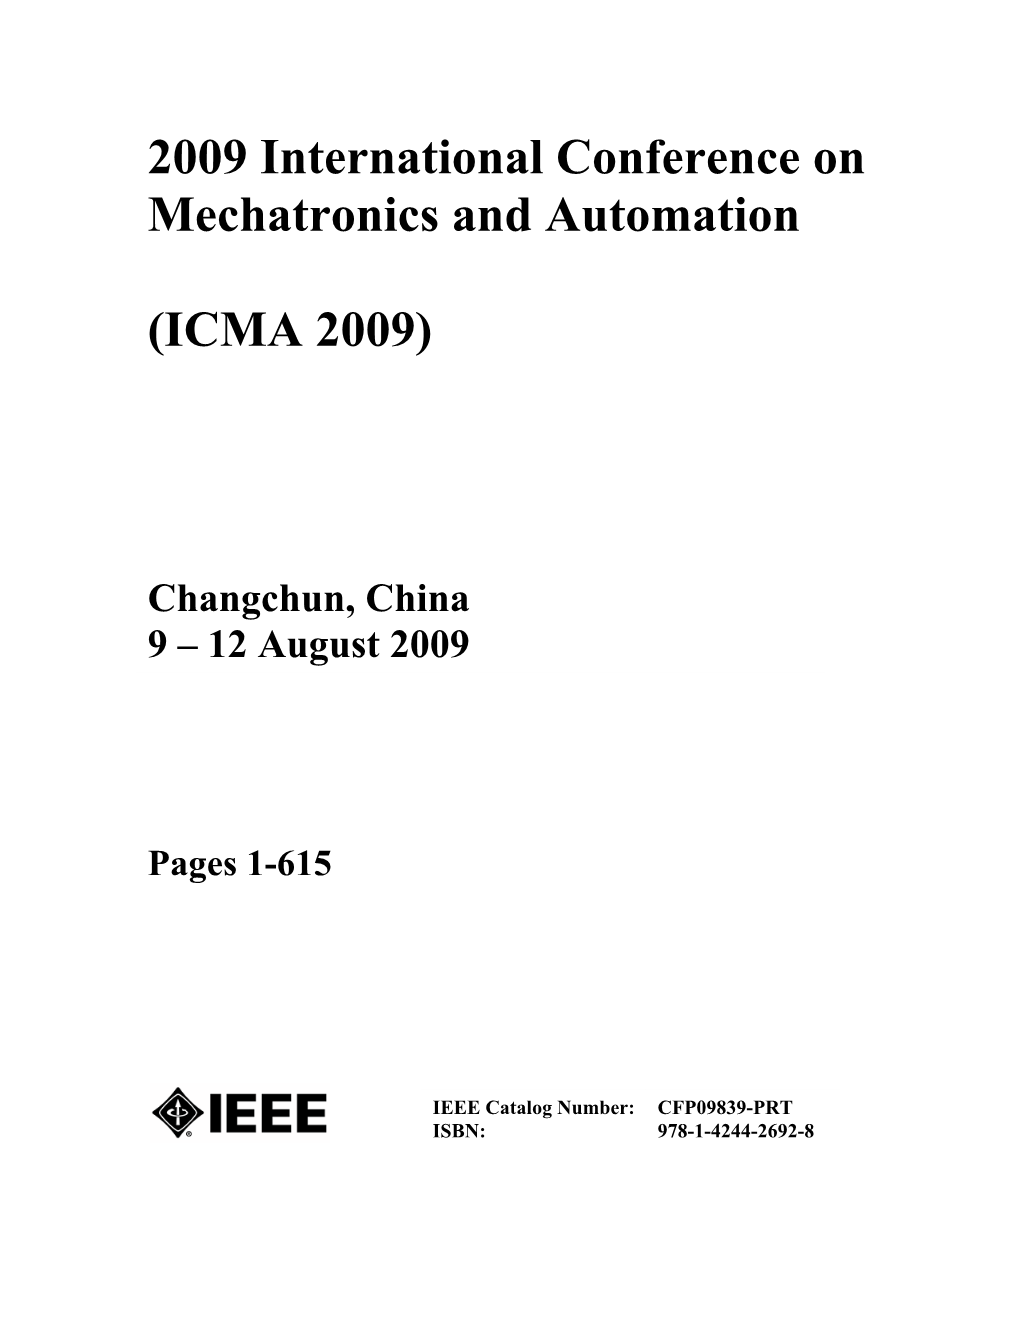 IEEE ICMA 2009 Conference Proceeding